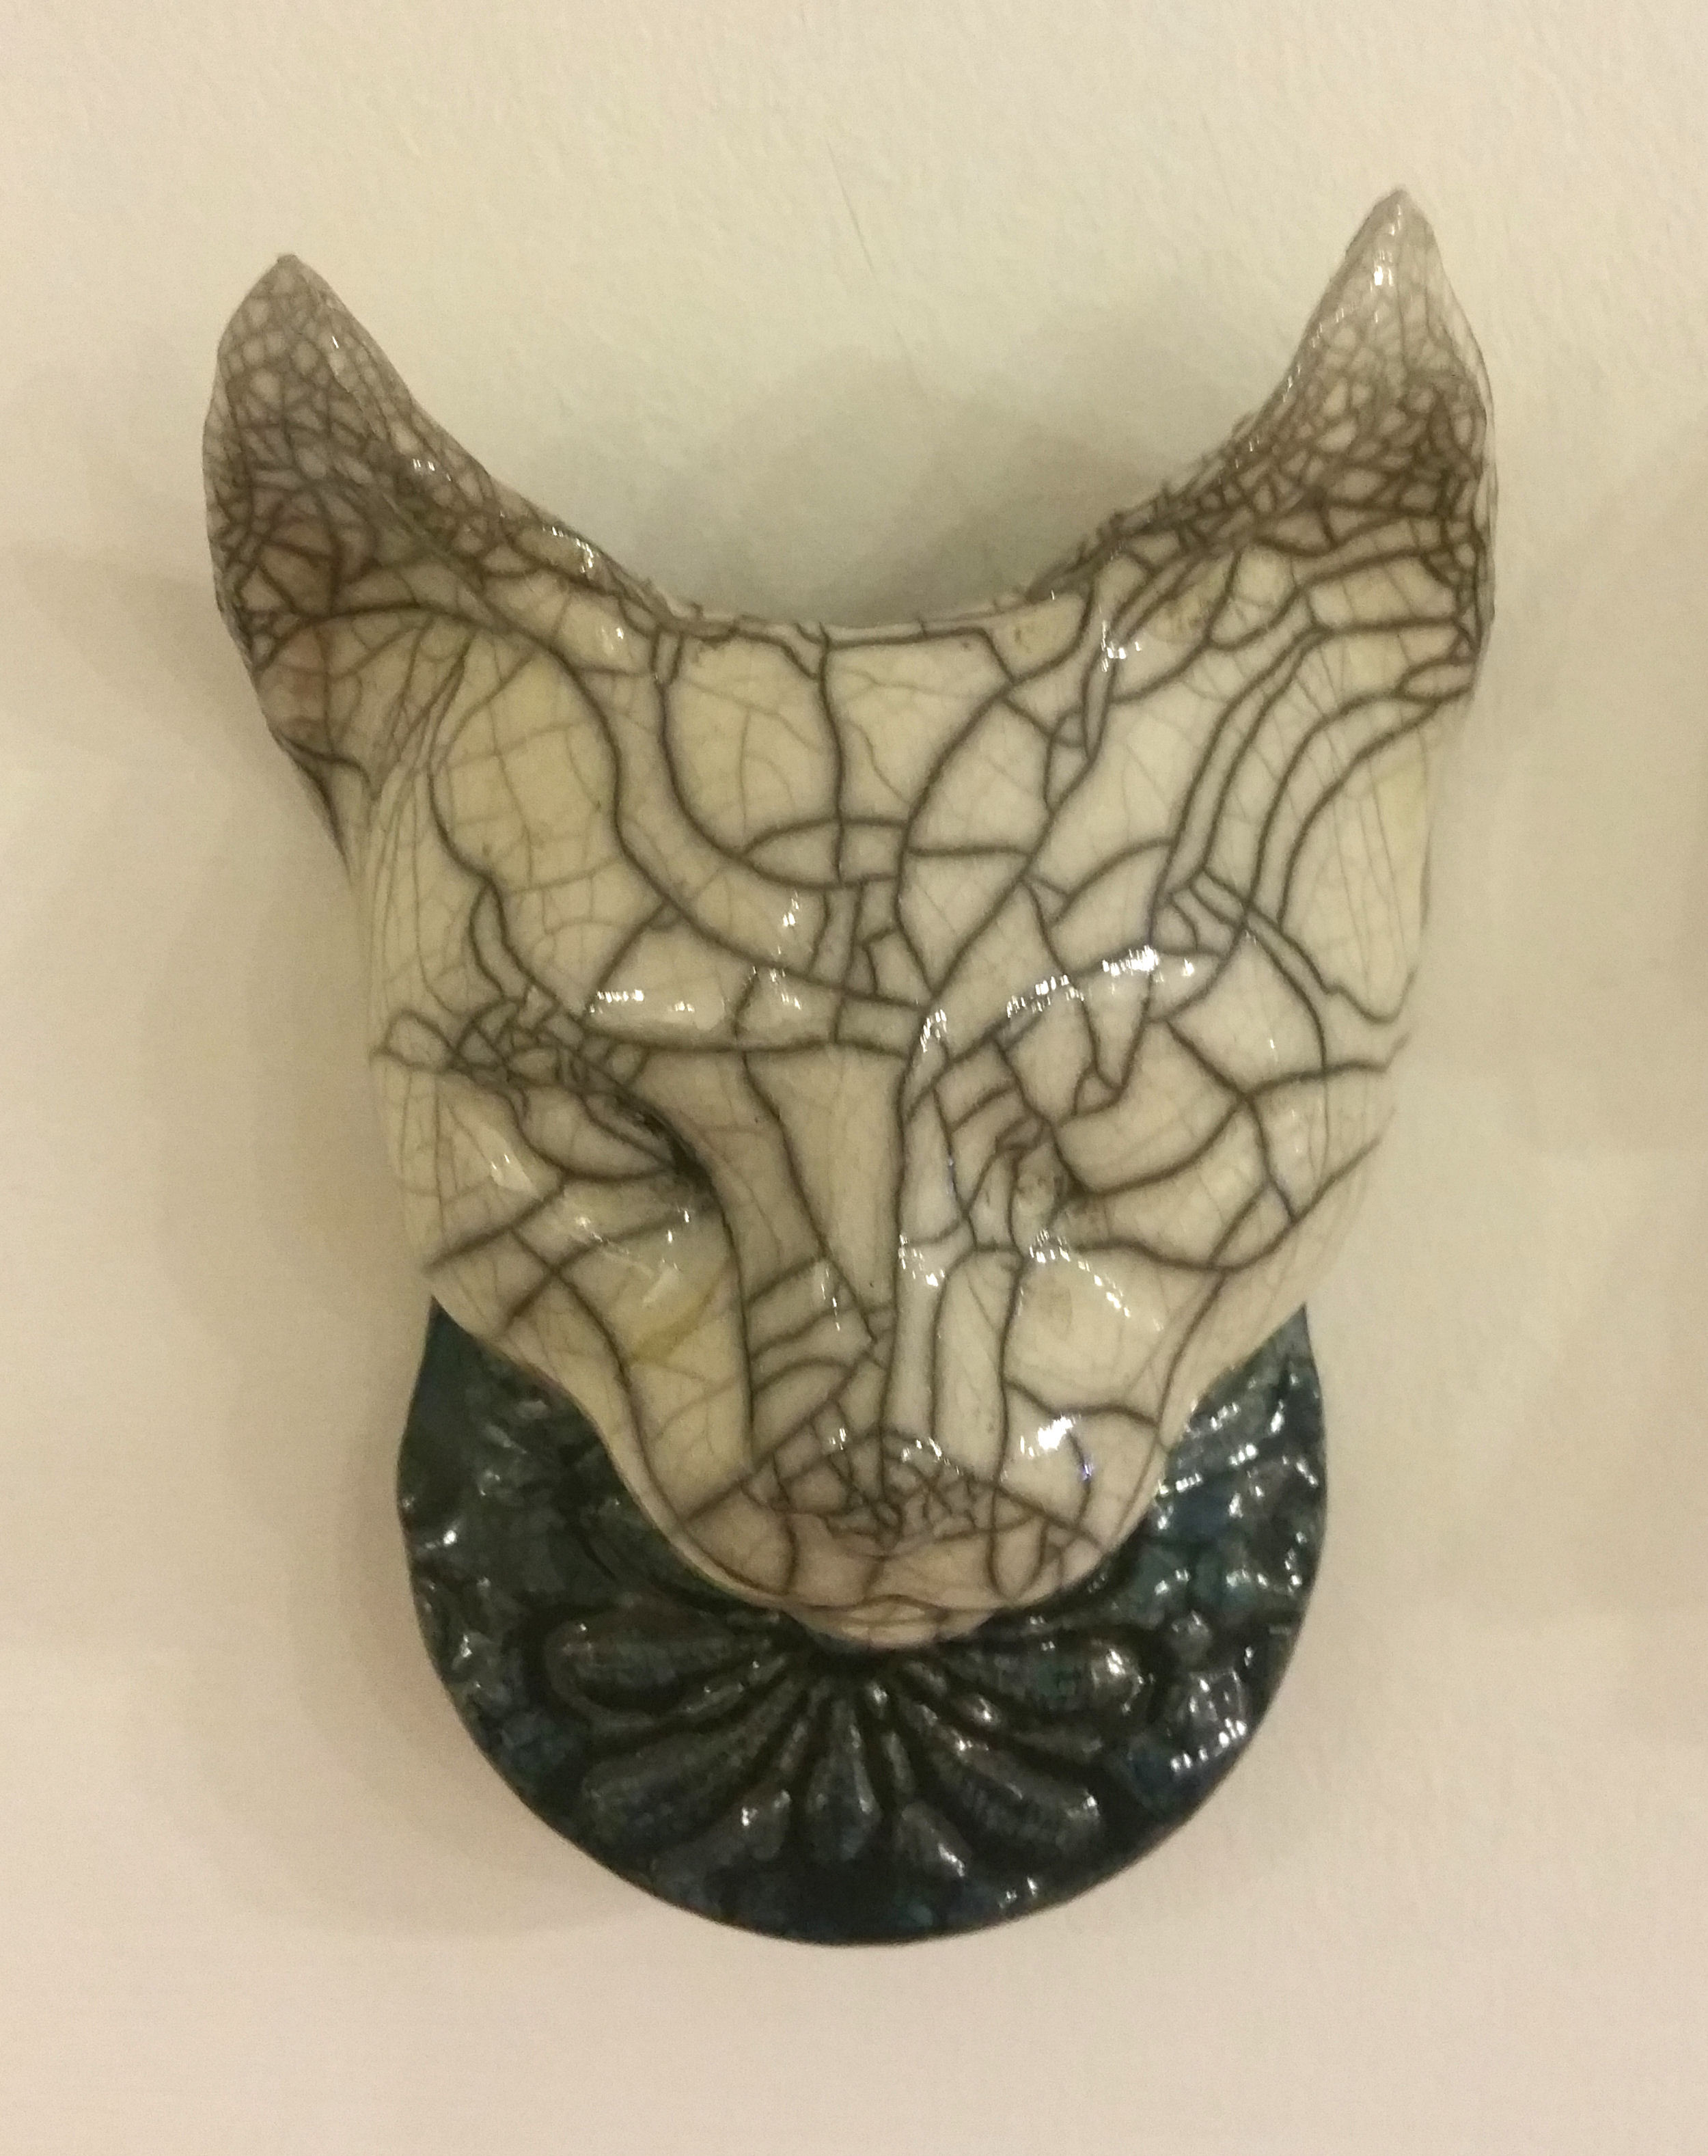 'Cat Mask VII' by artist Julian Smith